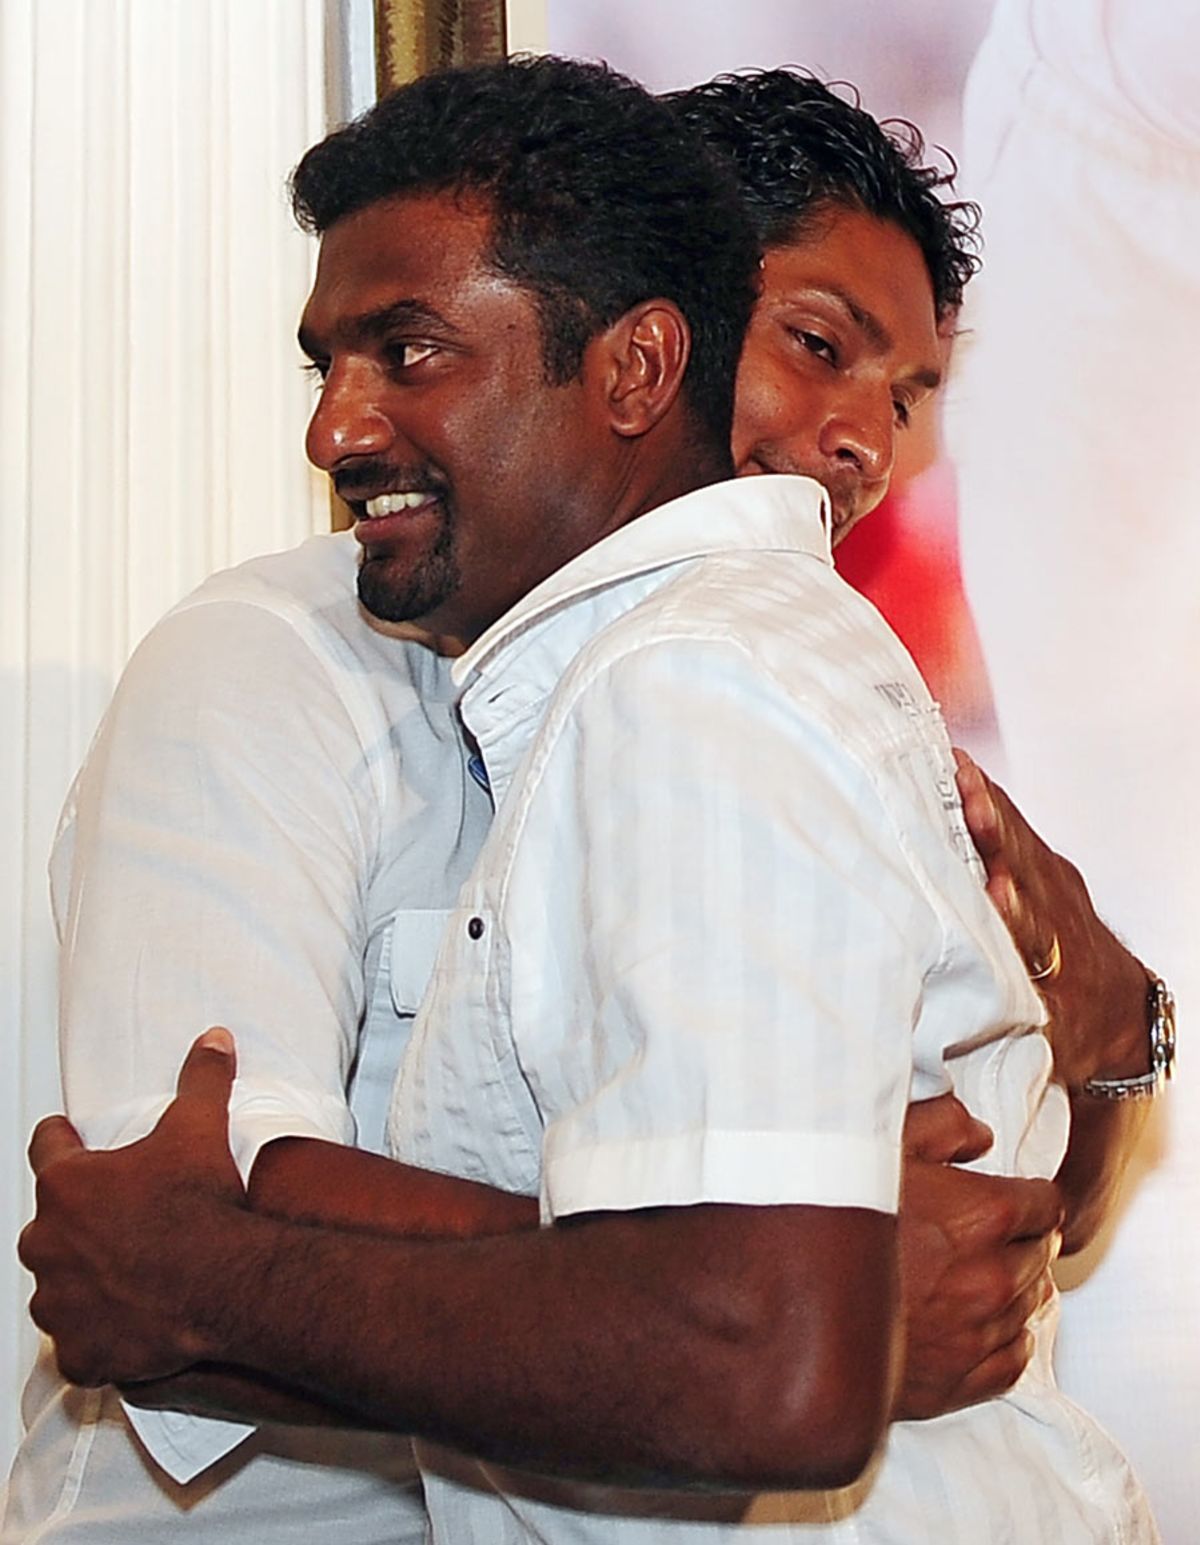 Muttiah Muralitharan is hugged by his captain Kumar Sangakkara, Colombo, July 8, 2010